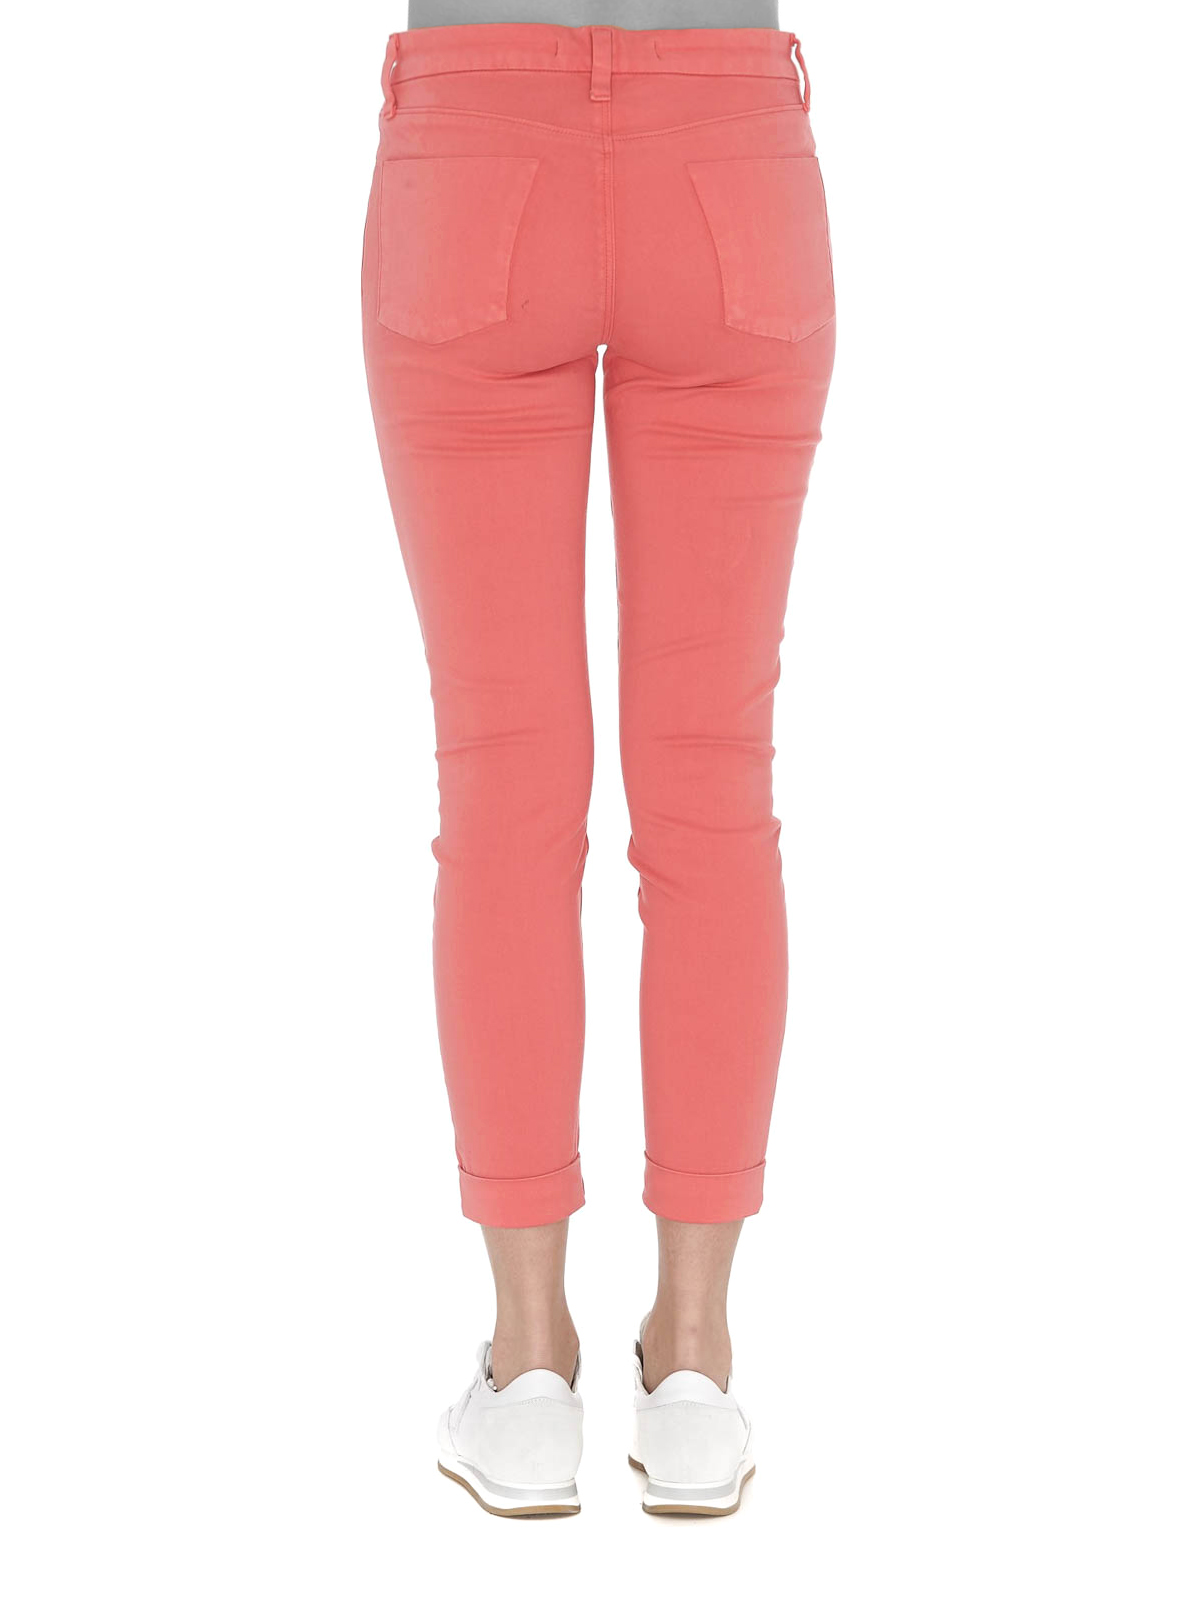 bibliotheek Botsing Memo Skinny jeans J Brand - Light pink denim jeans - JB0014318020T638J82001